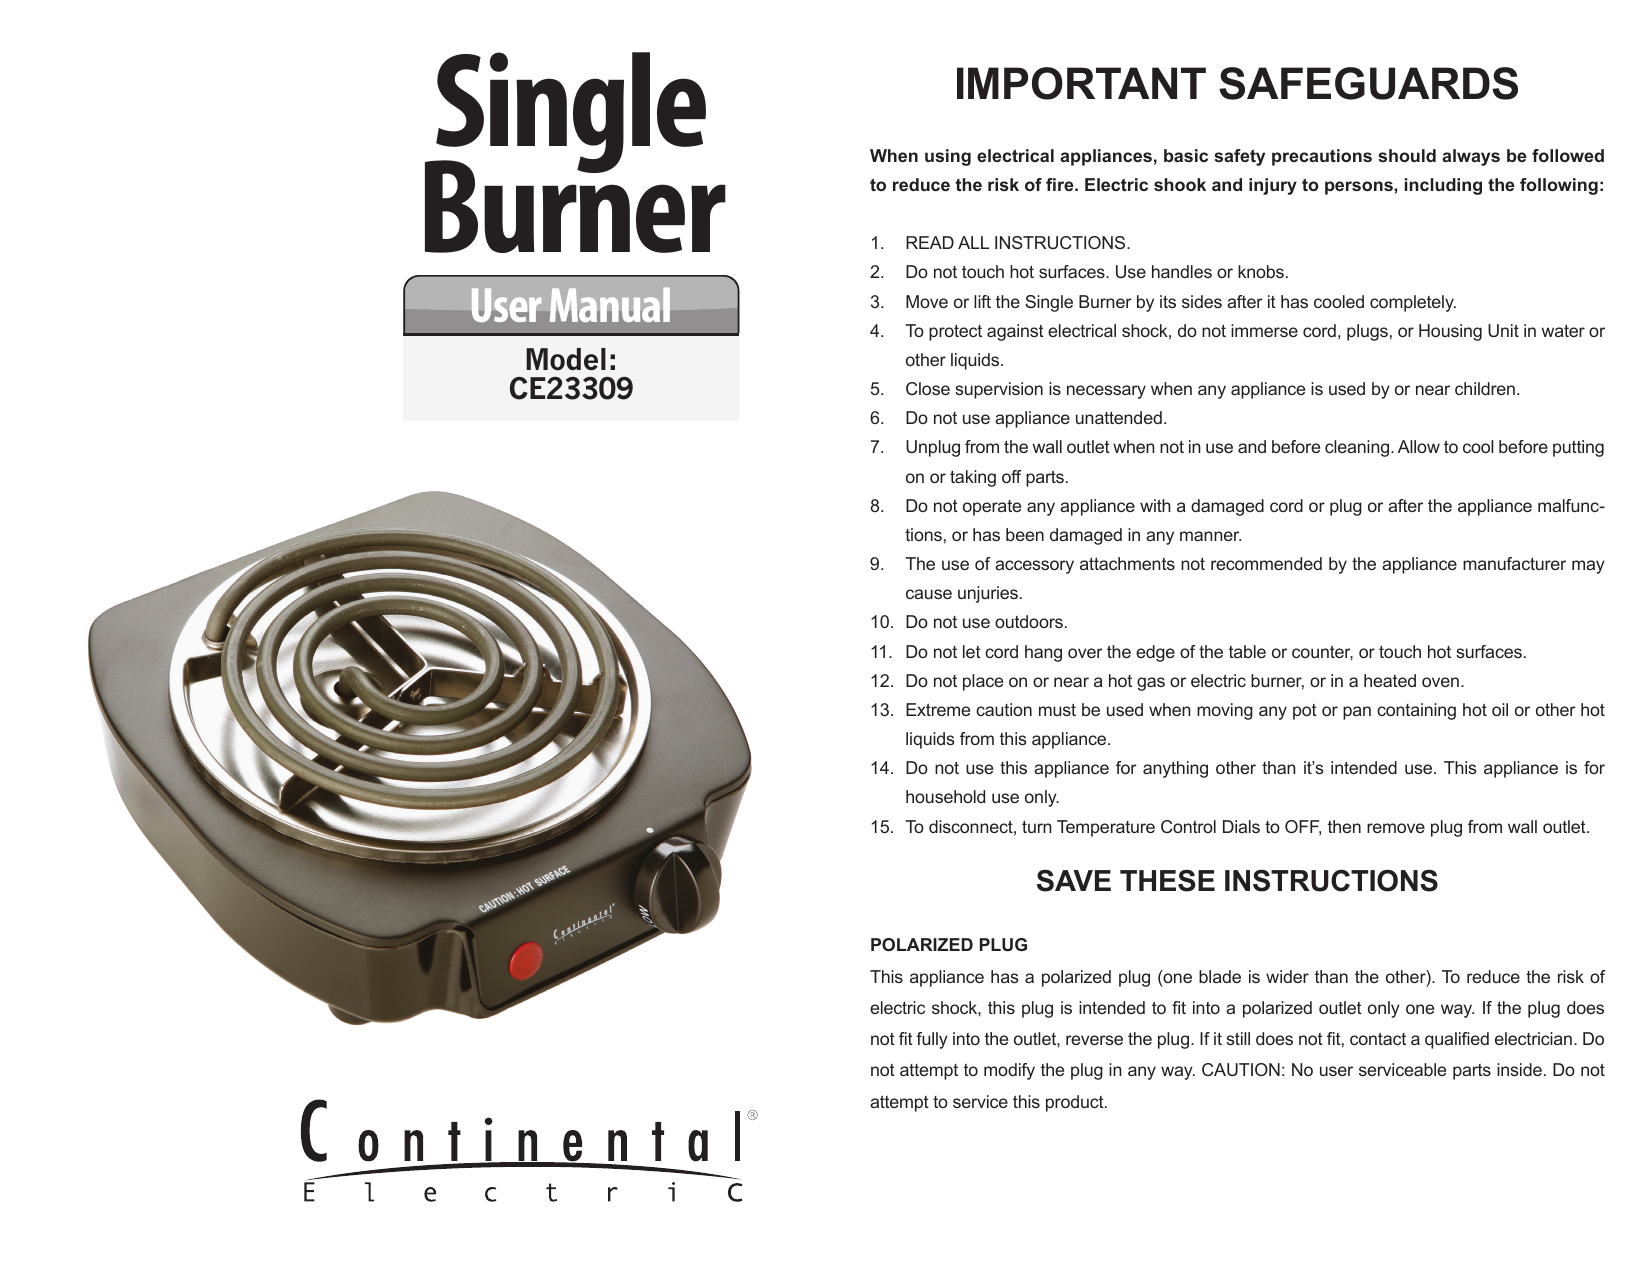 Continental Electric Single Burner CE23309